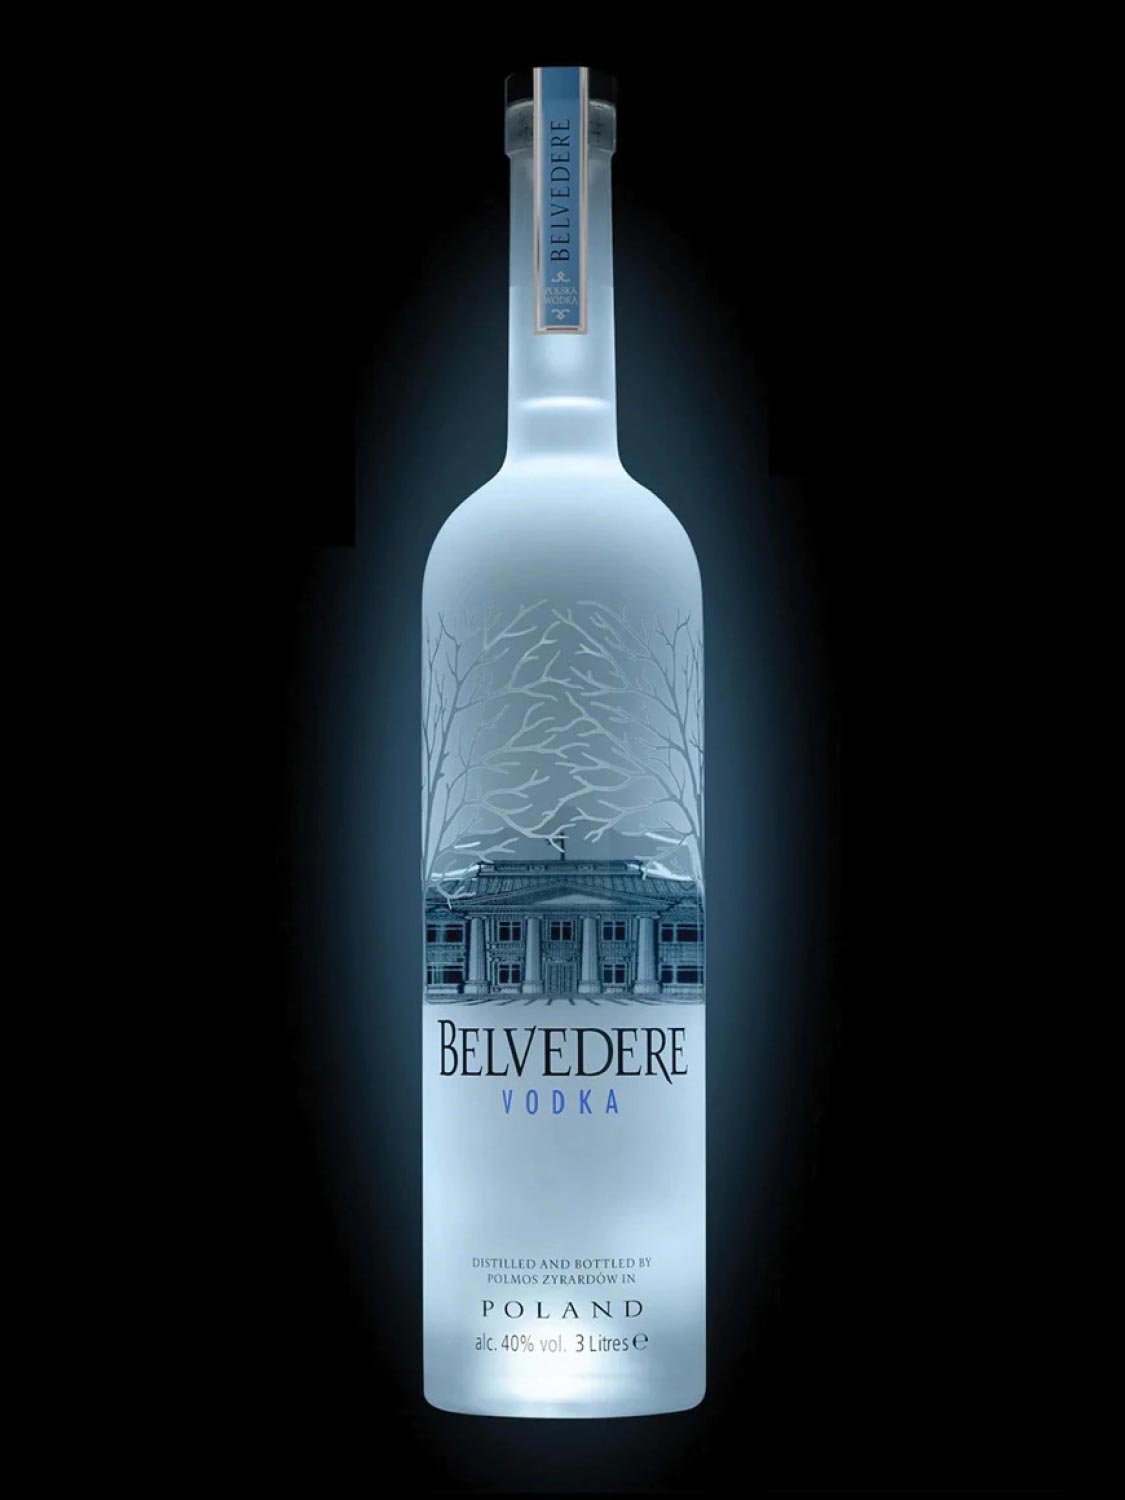 Belvedere Night Saber Luminous Jeroboam Vodka 3L